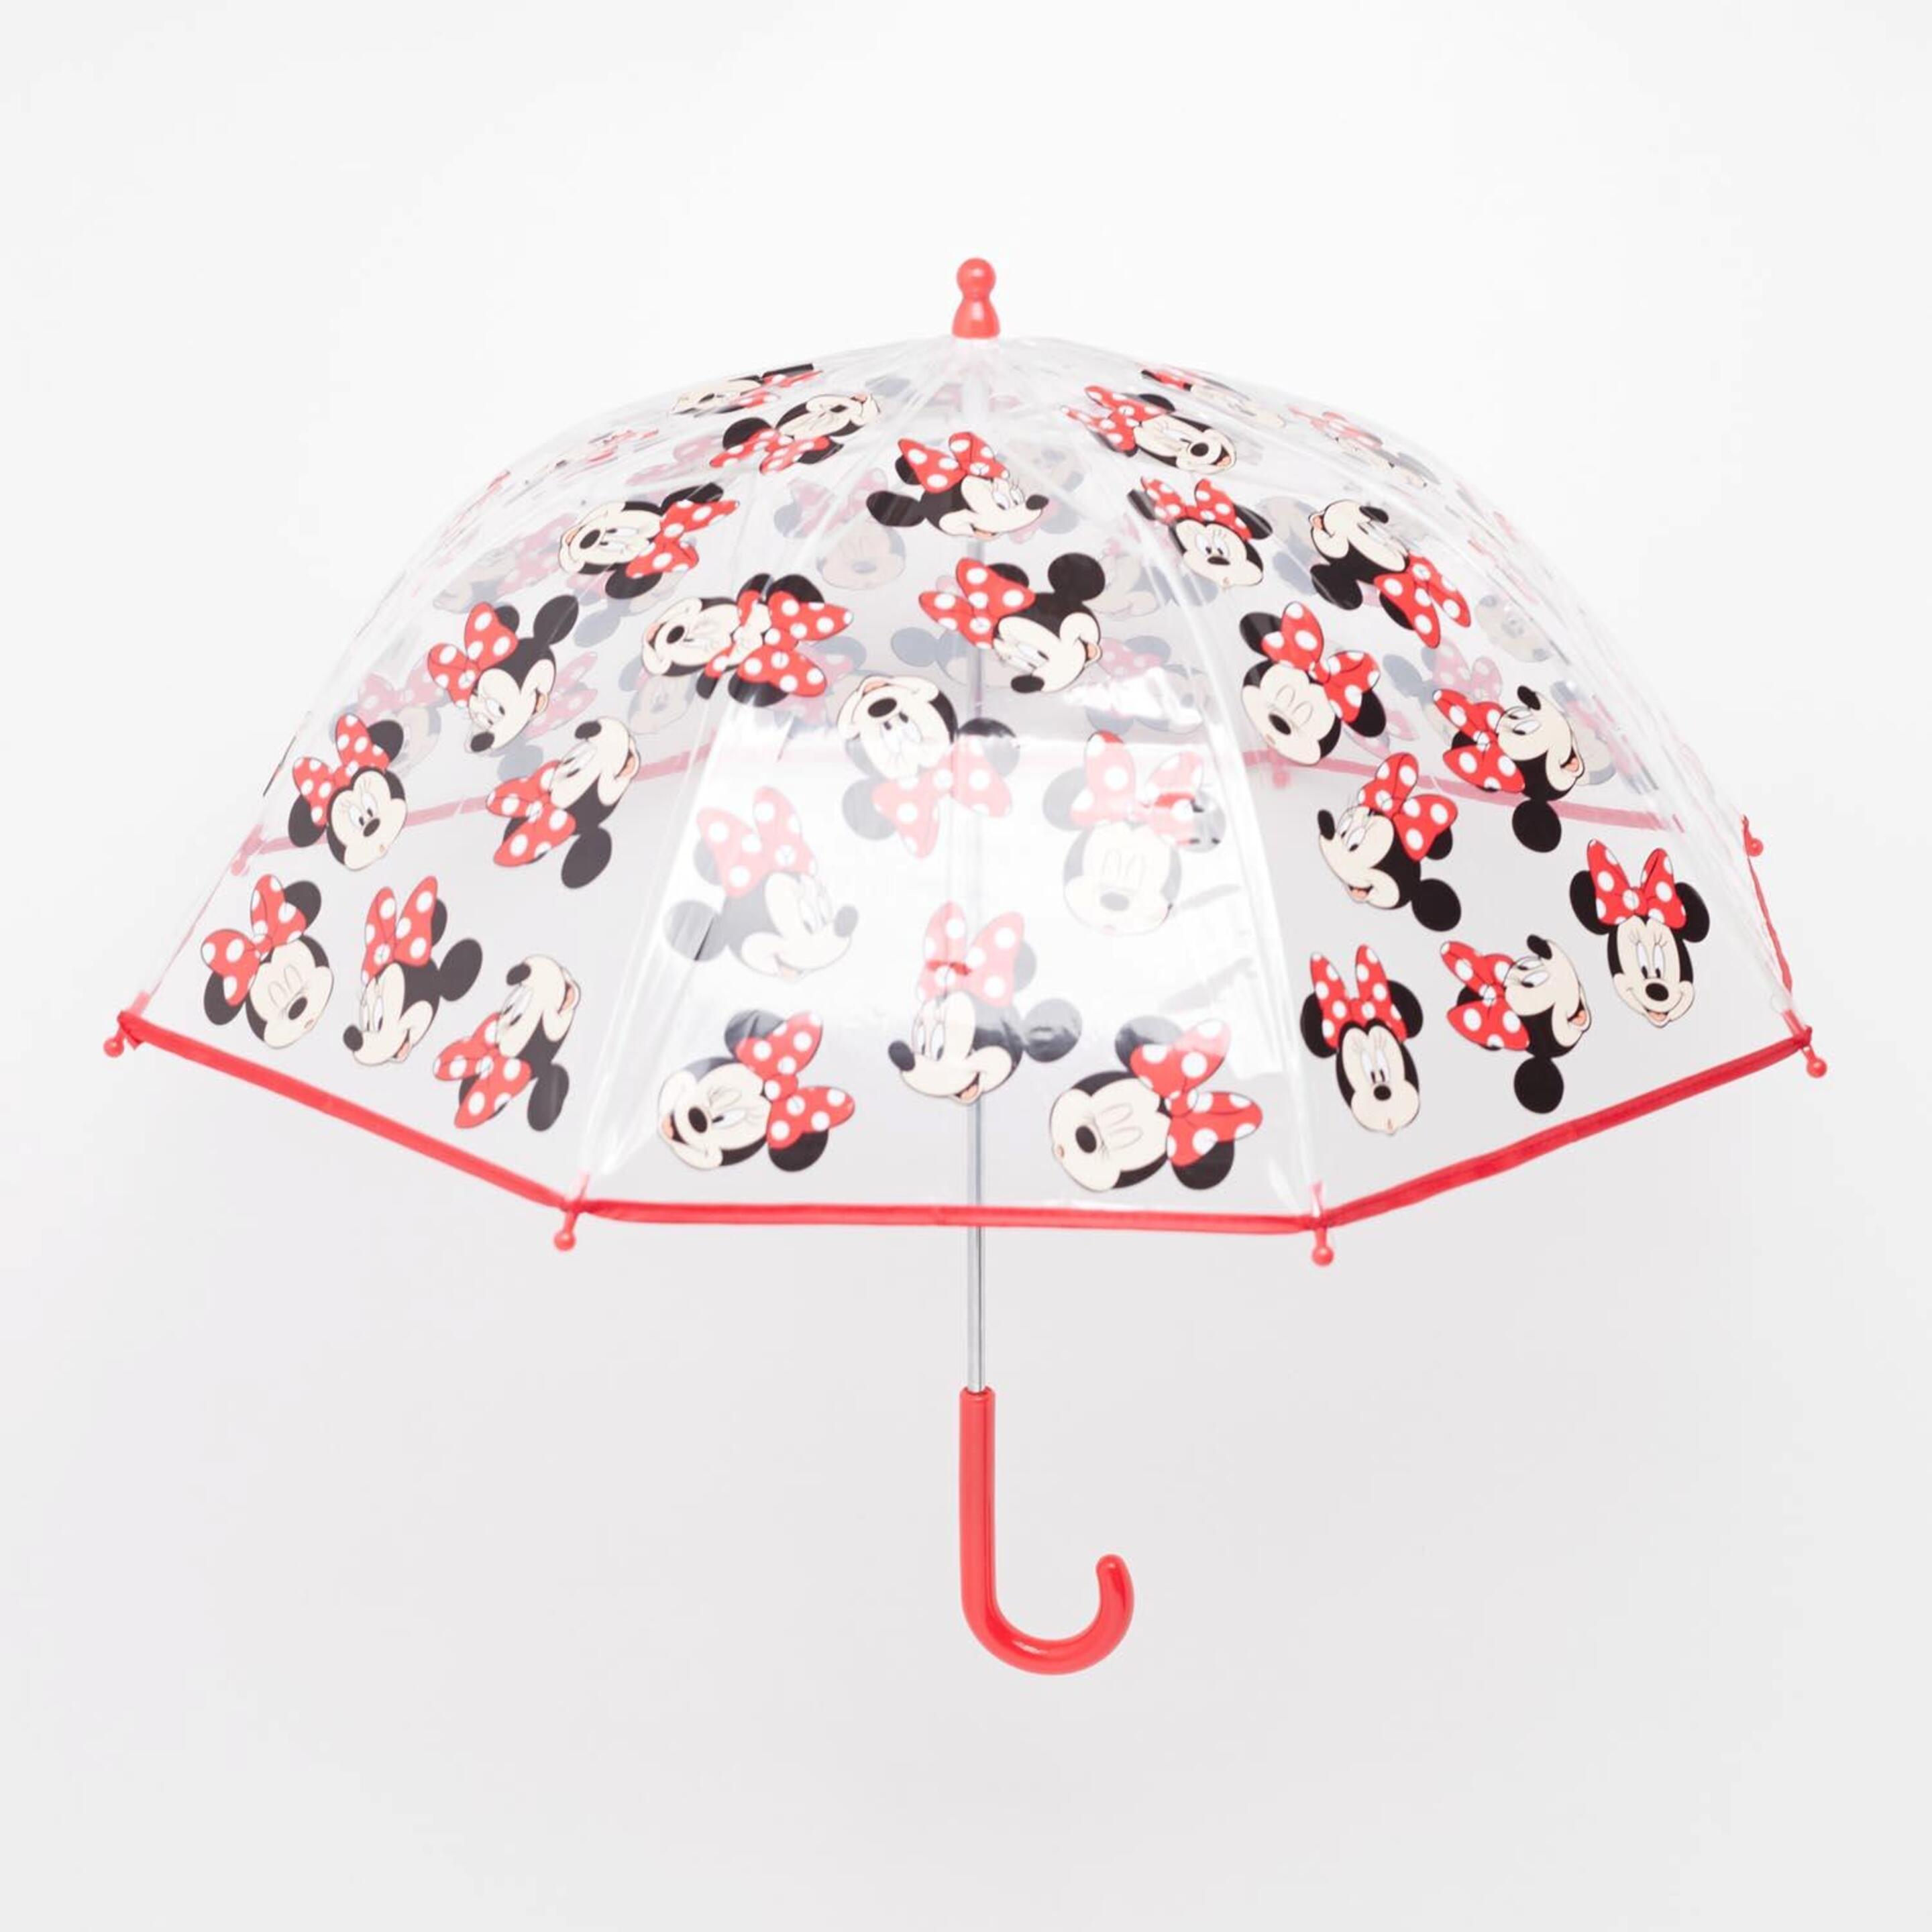 Paraguas Minnie Mouse - rojo - Paraguas Disney